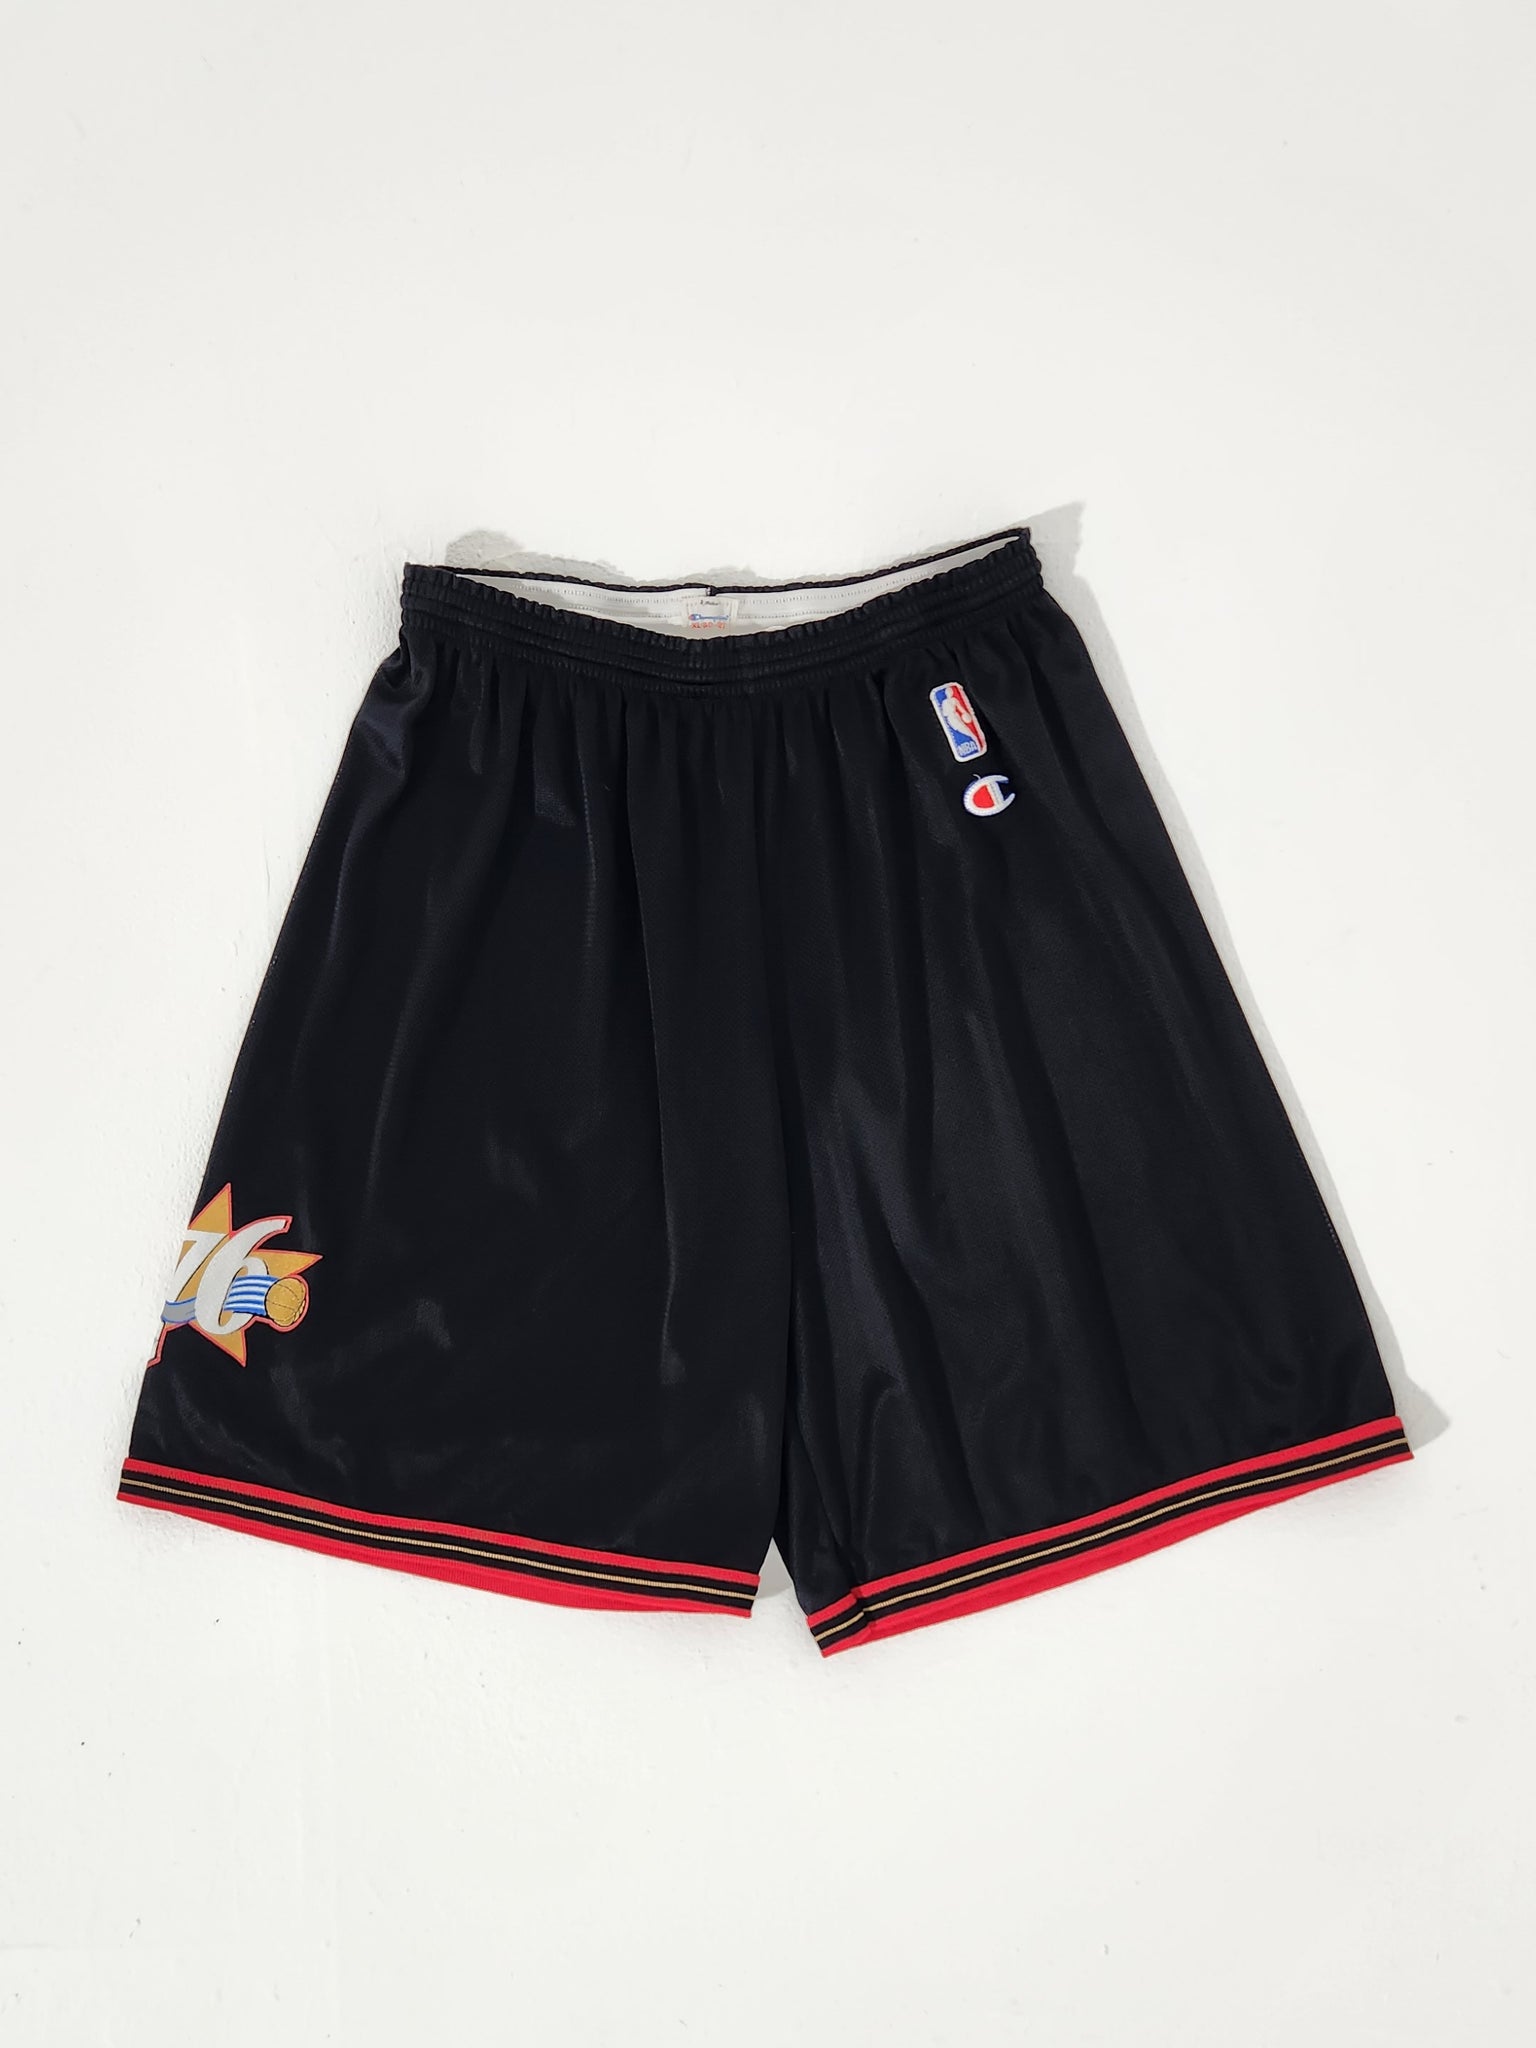 Vintage 1990's Champion NBA Philadelphia 76ers Basketball Shorts Sz. X